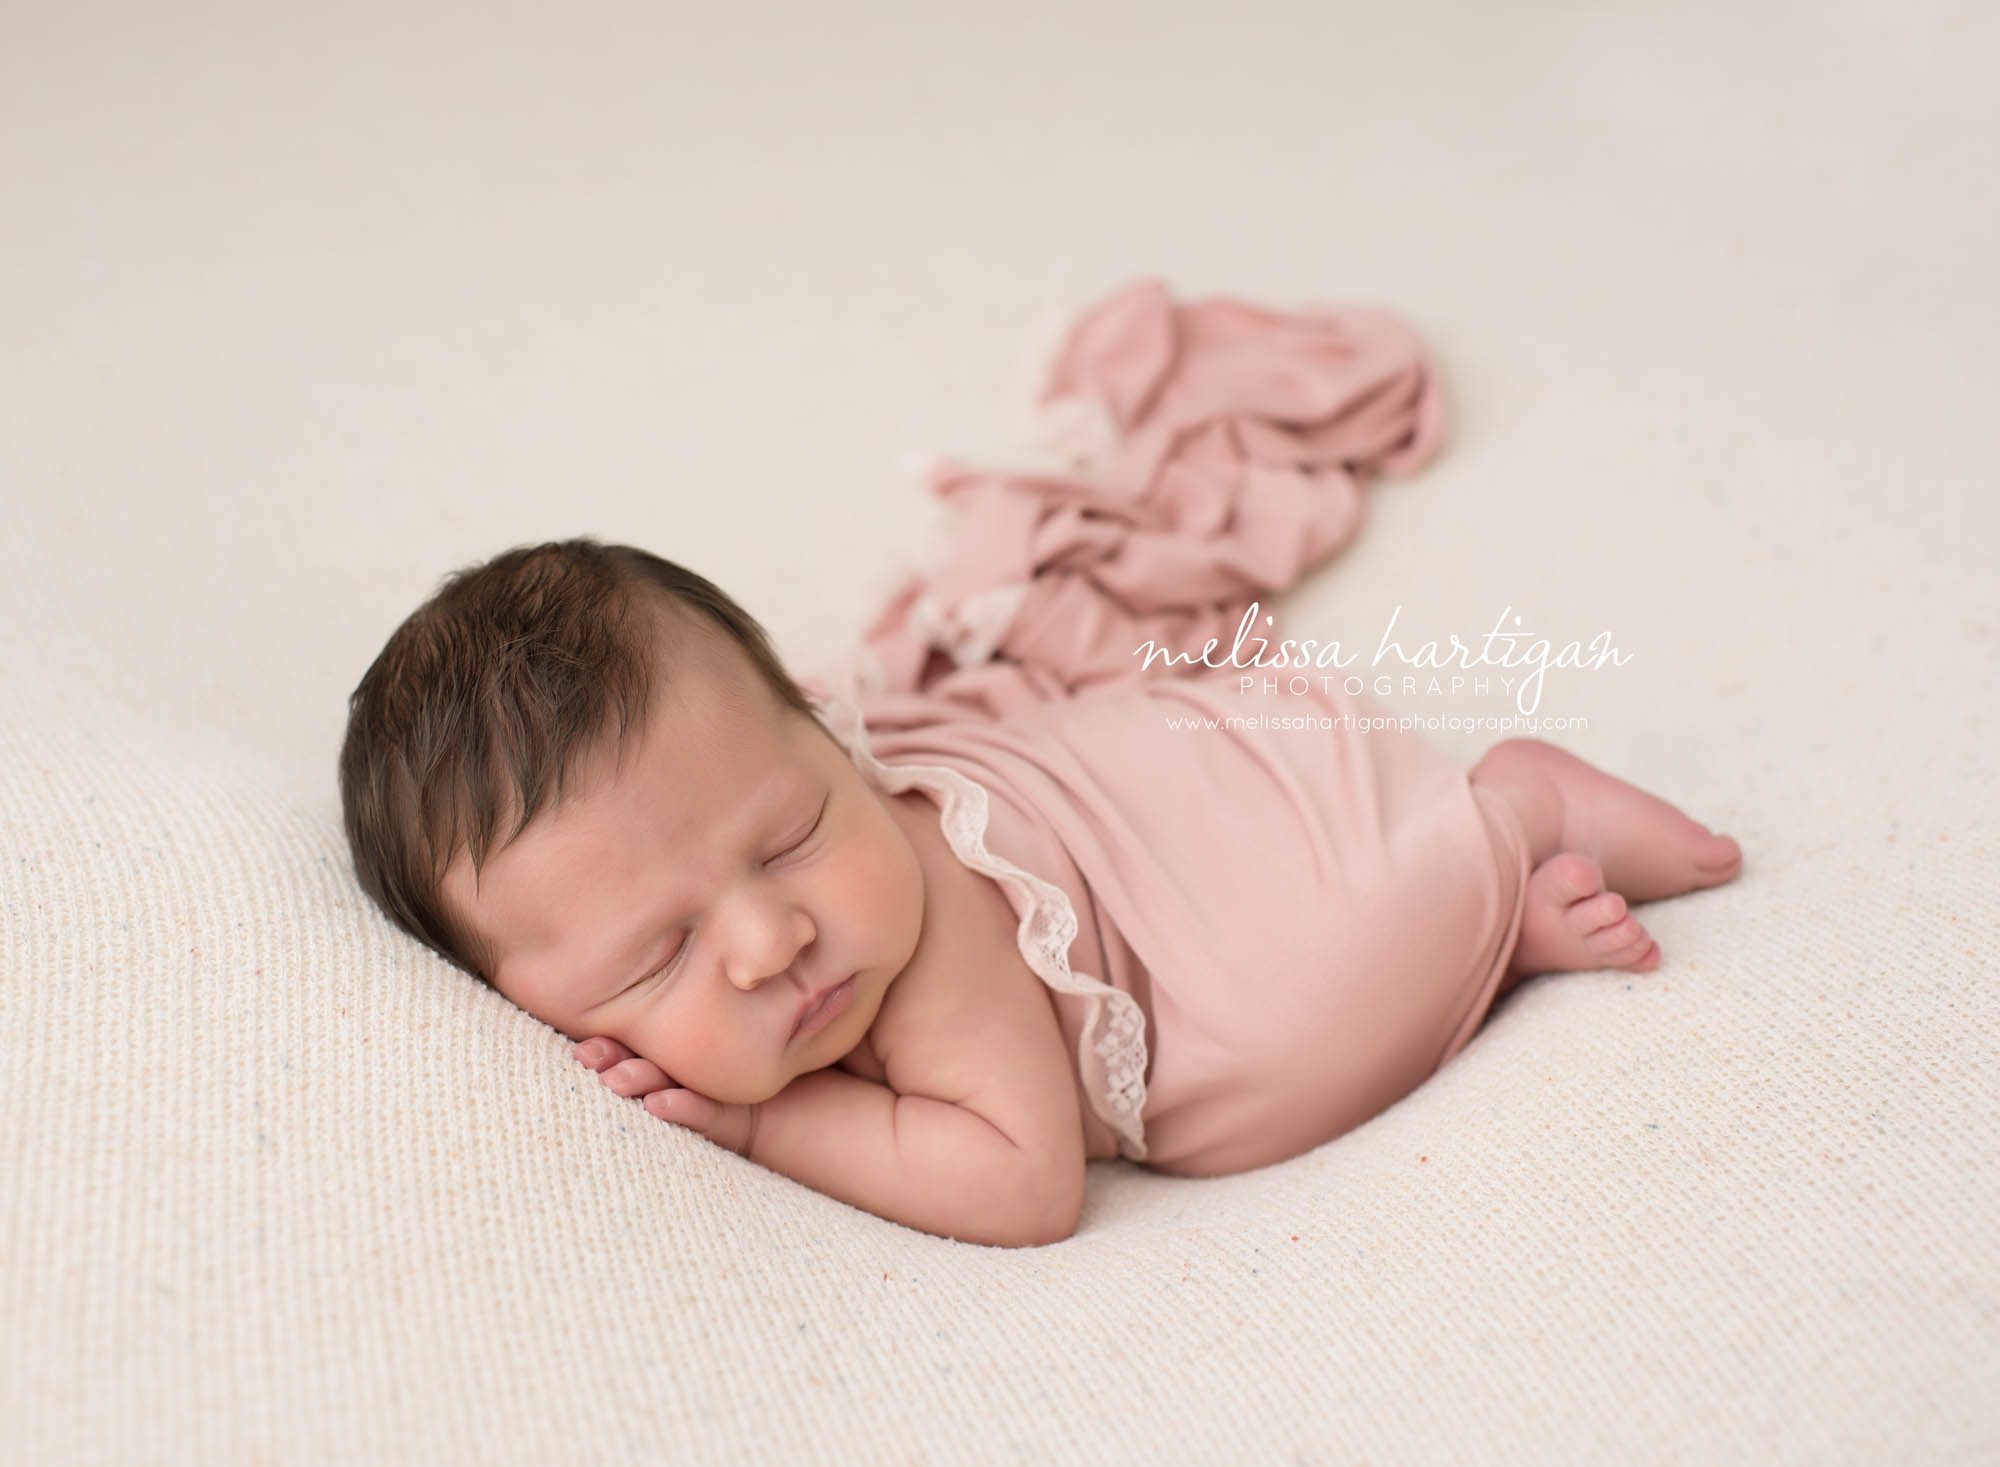 Melissa Hartigan Photography Connecticut Newborn Photographer trumbull Ct baby Fairfield county Baby girl pink wrap on pink blanket sleeping CT mini newborn session